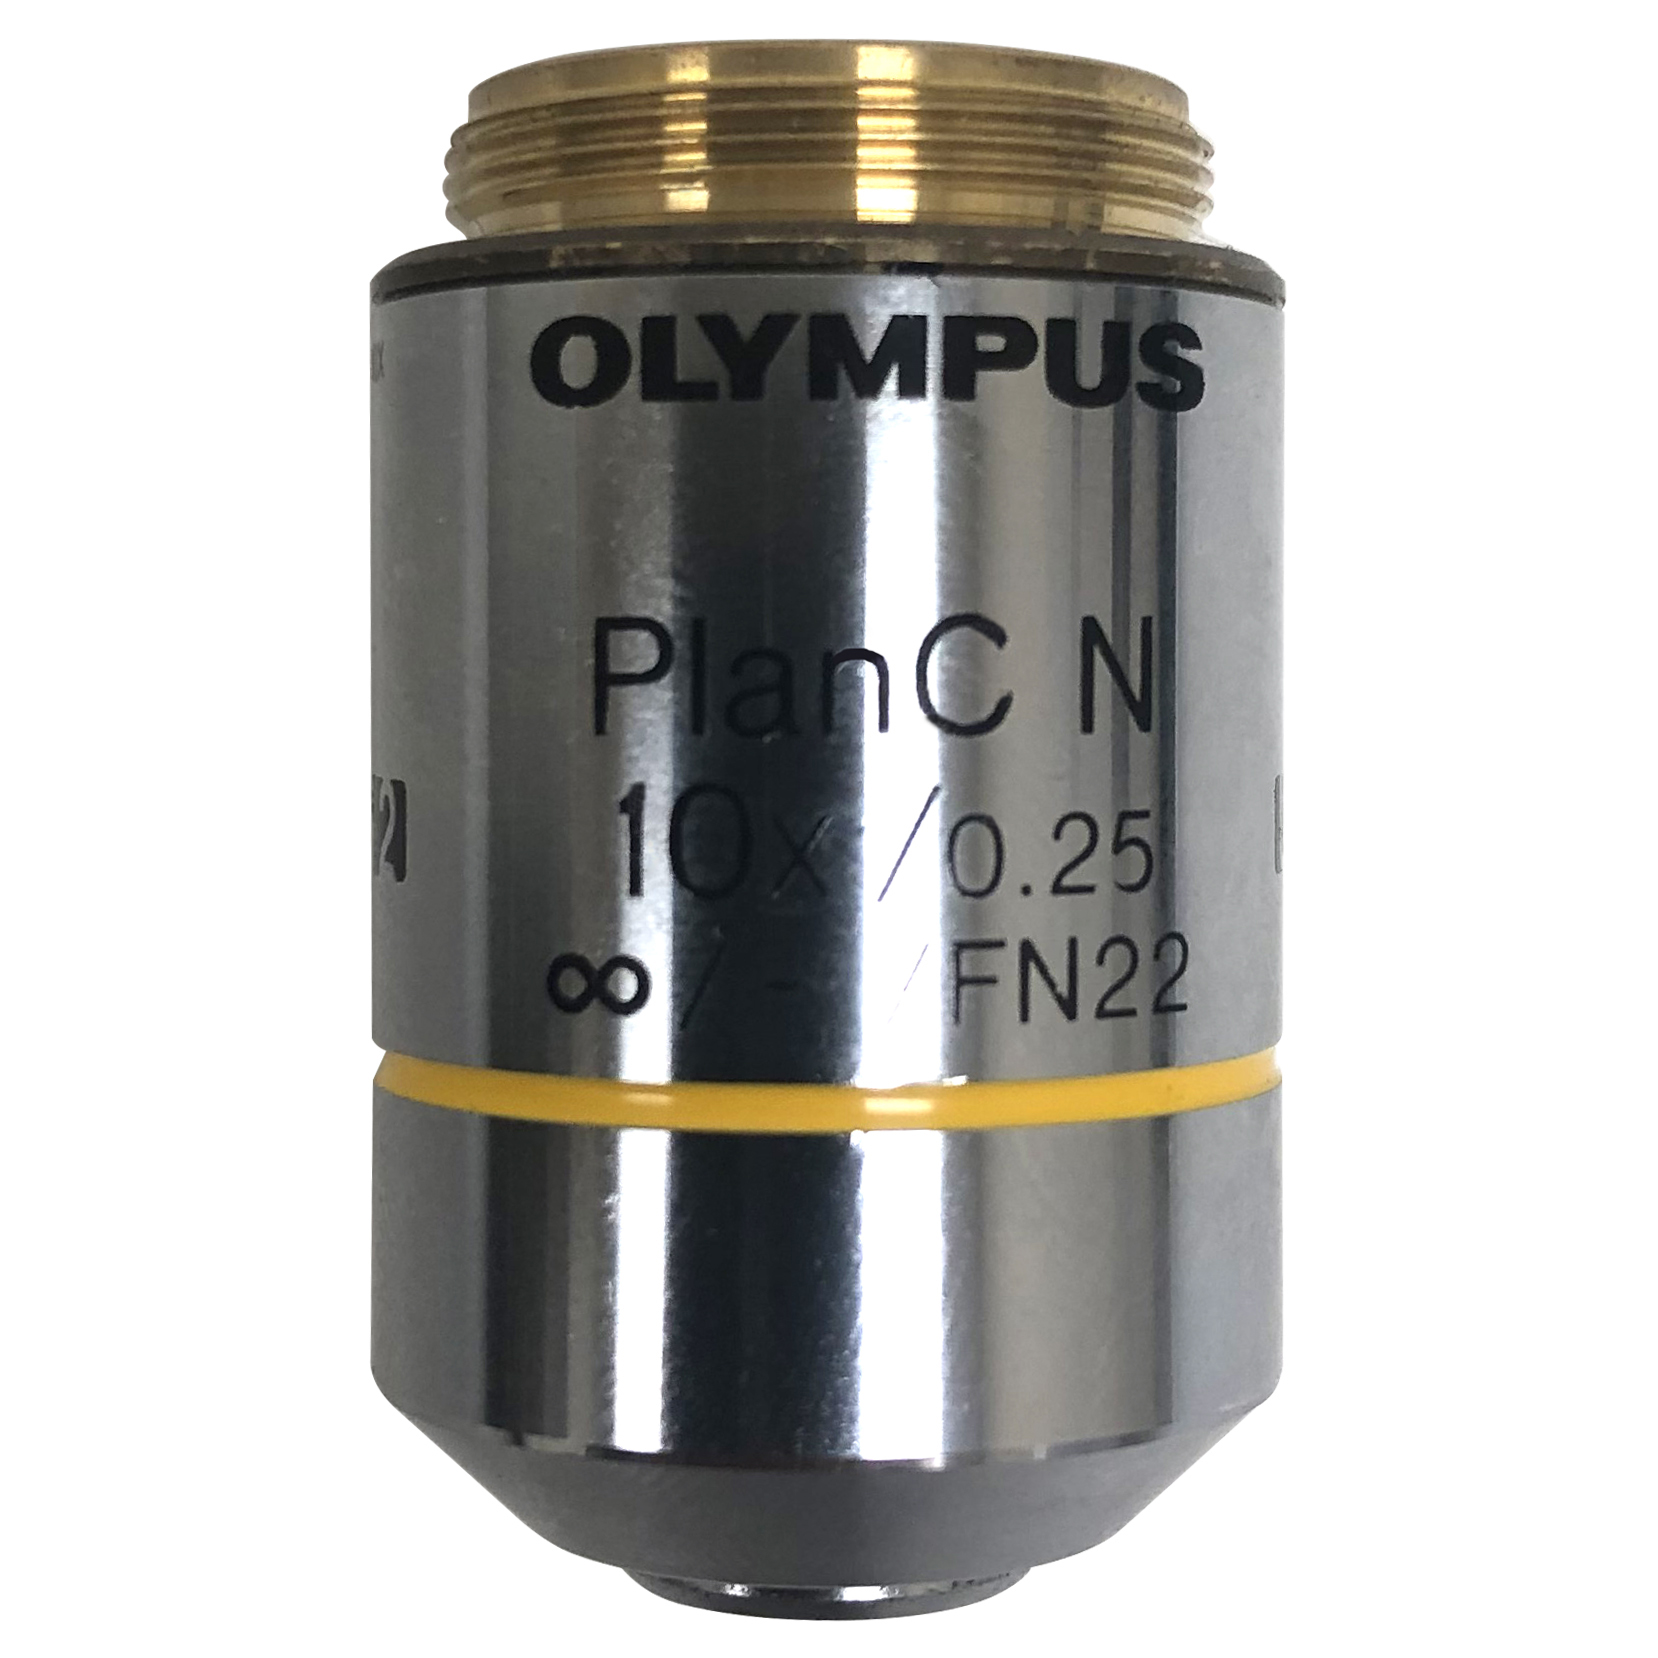 Olympus 10X/0.25 Infinity PlanC N Microscope Objective Hero